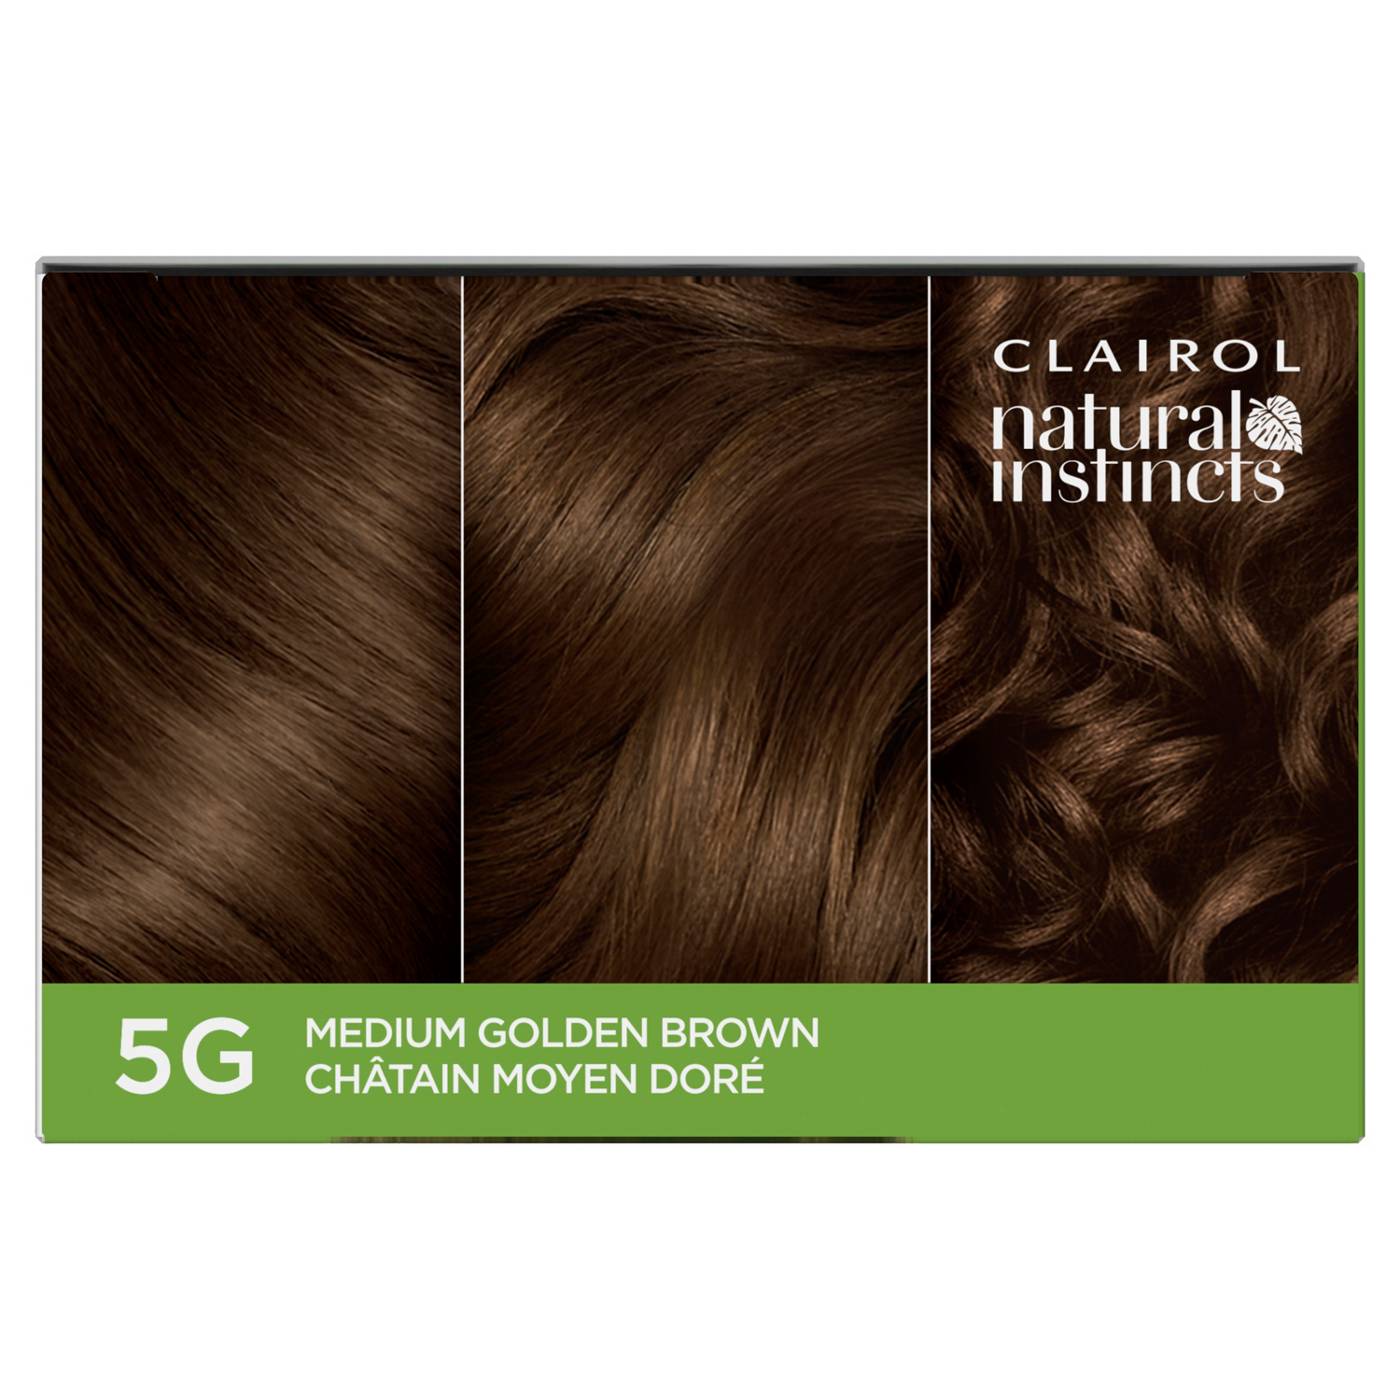 Clairol Natural Instincts Vegan Demi-Permanent Hair Color - 5G Medium Golden Brown; image 6 of 10